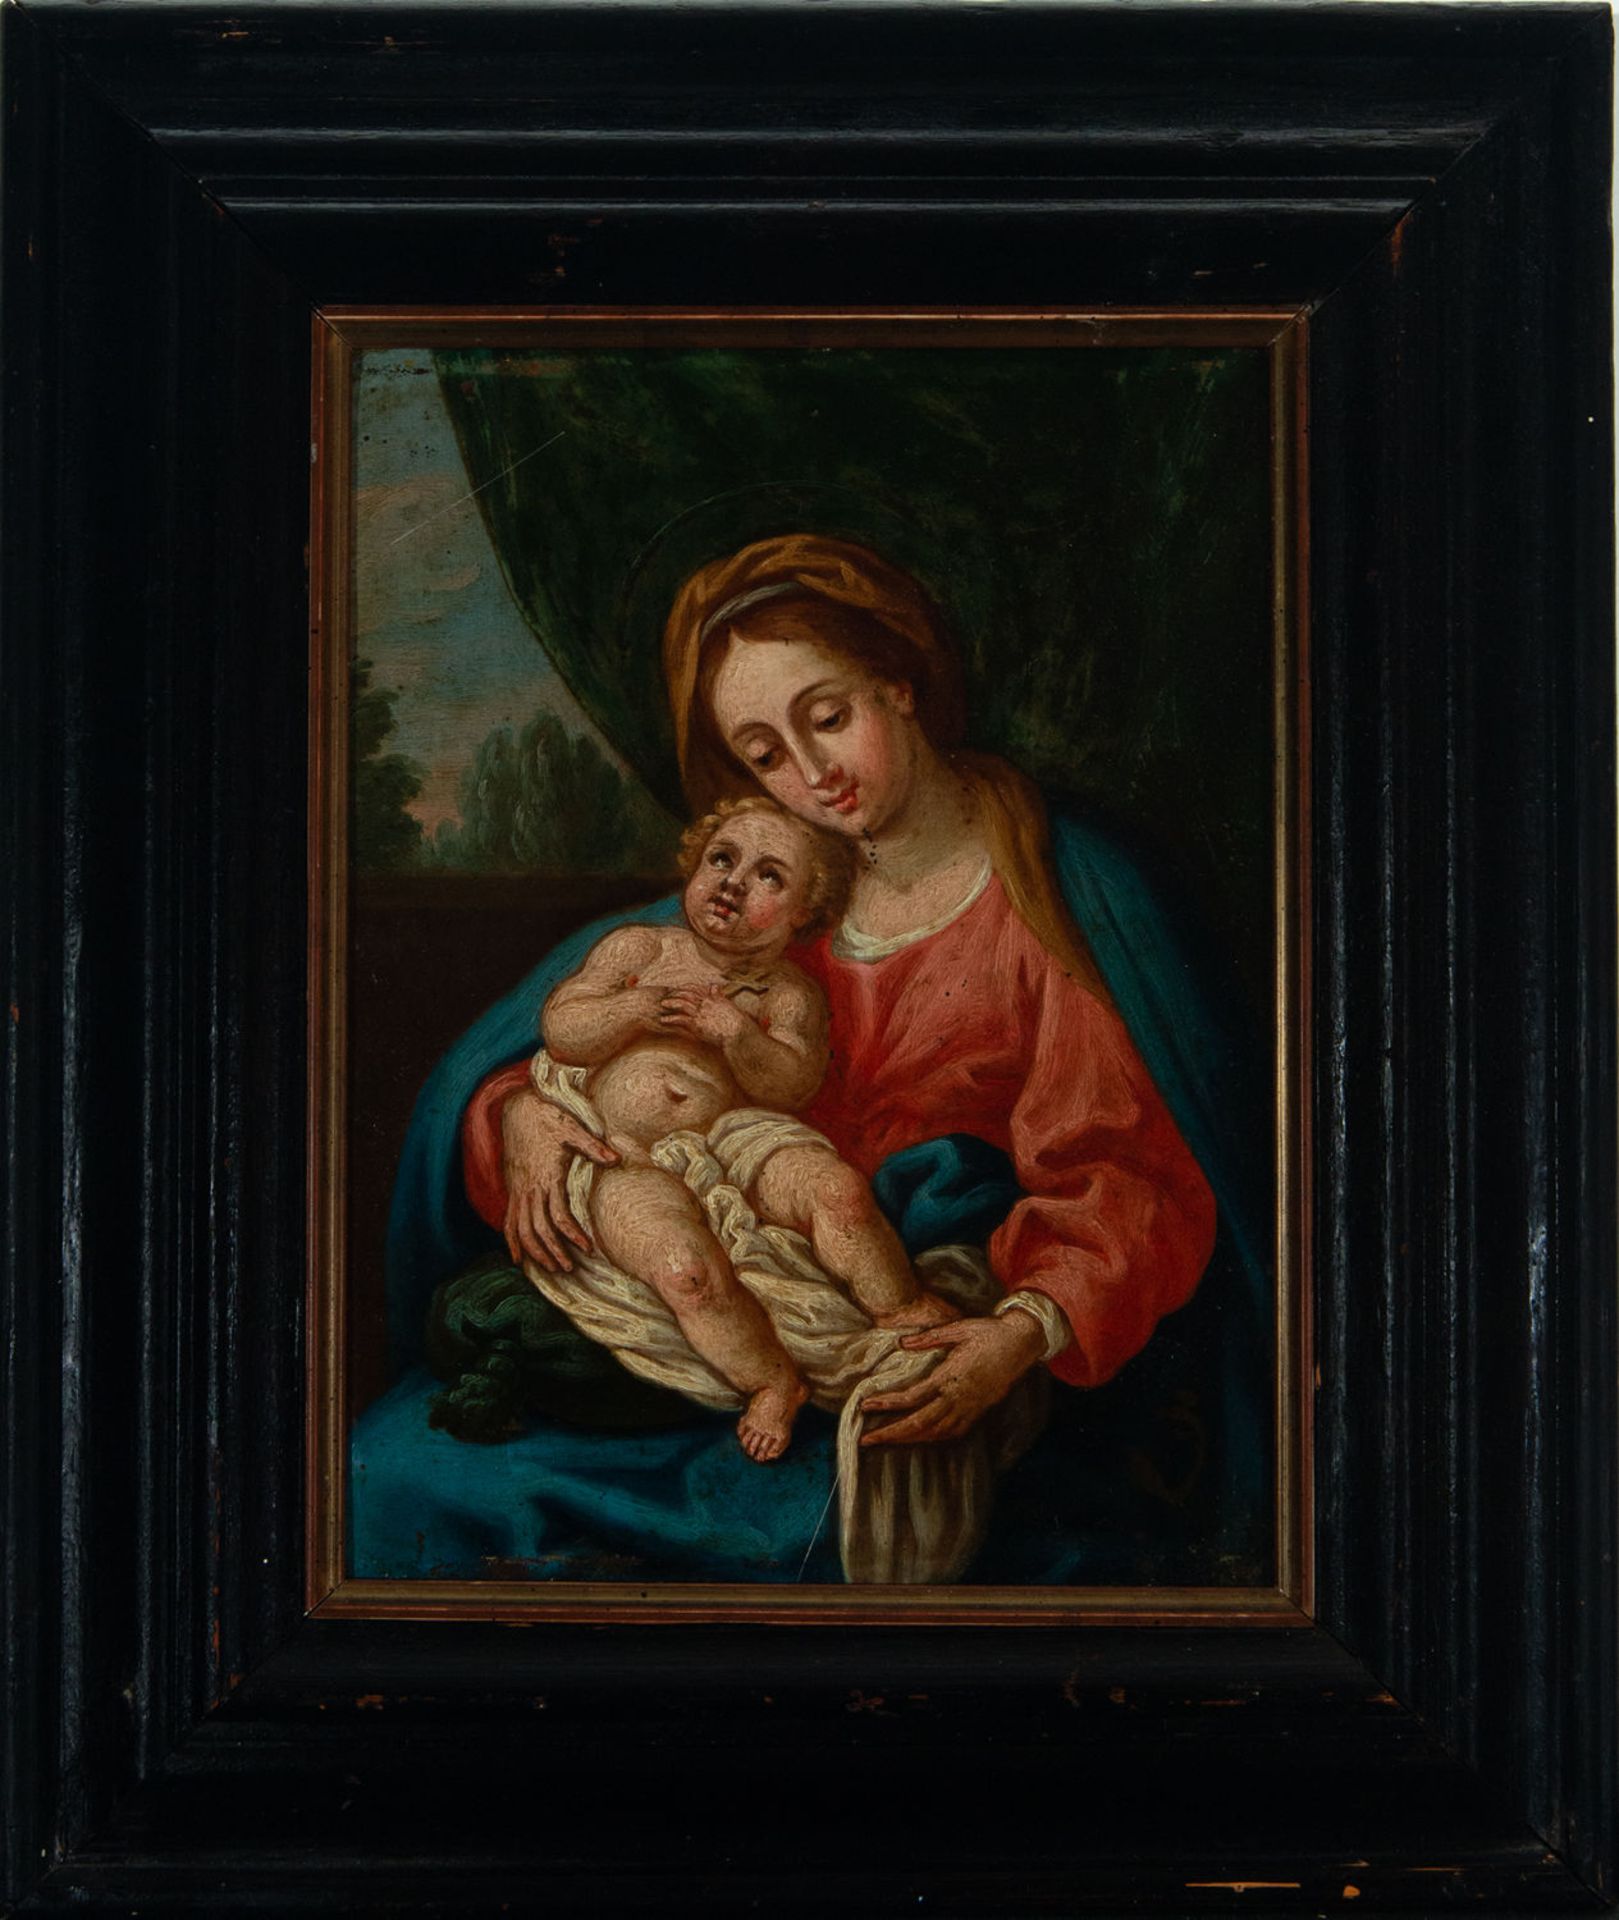 Madonna with Child, 18th century Italian school